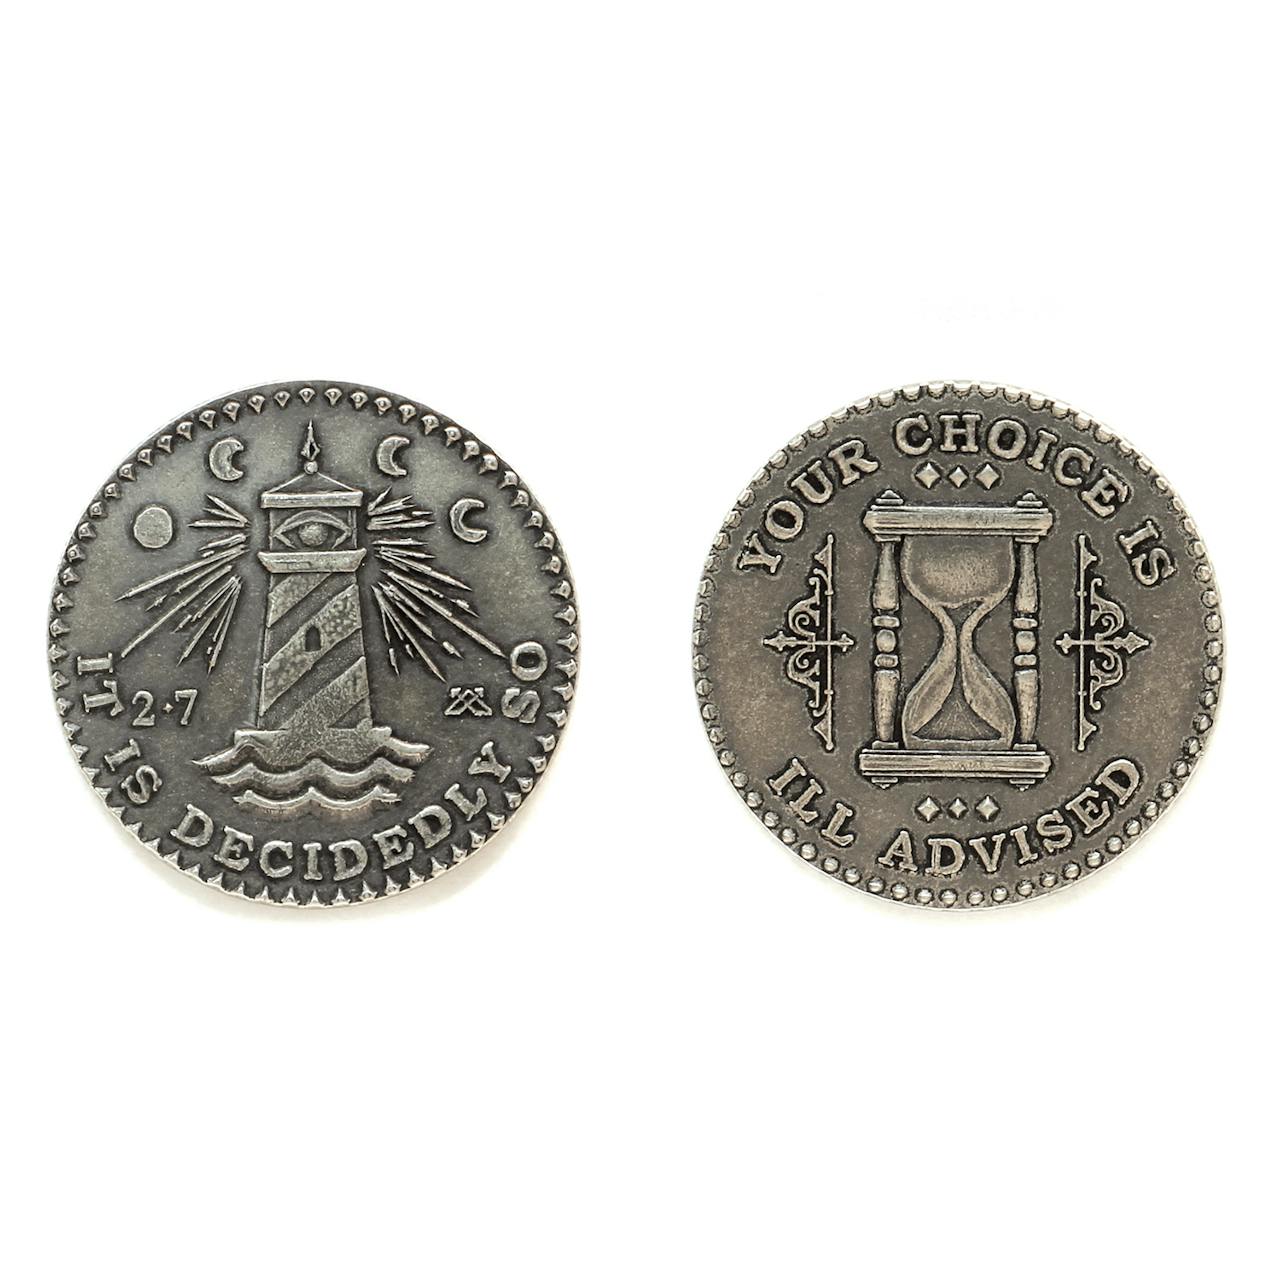 J. L. Lawson & Co. The Decision Maker Coin